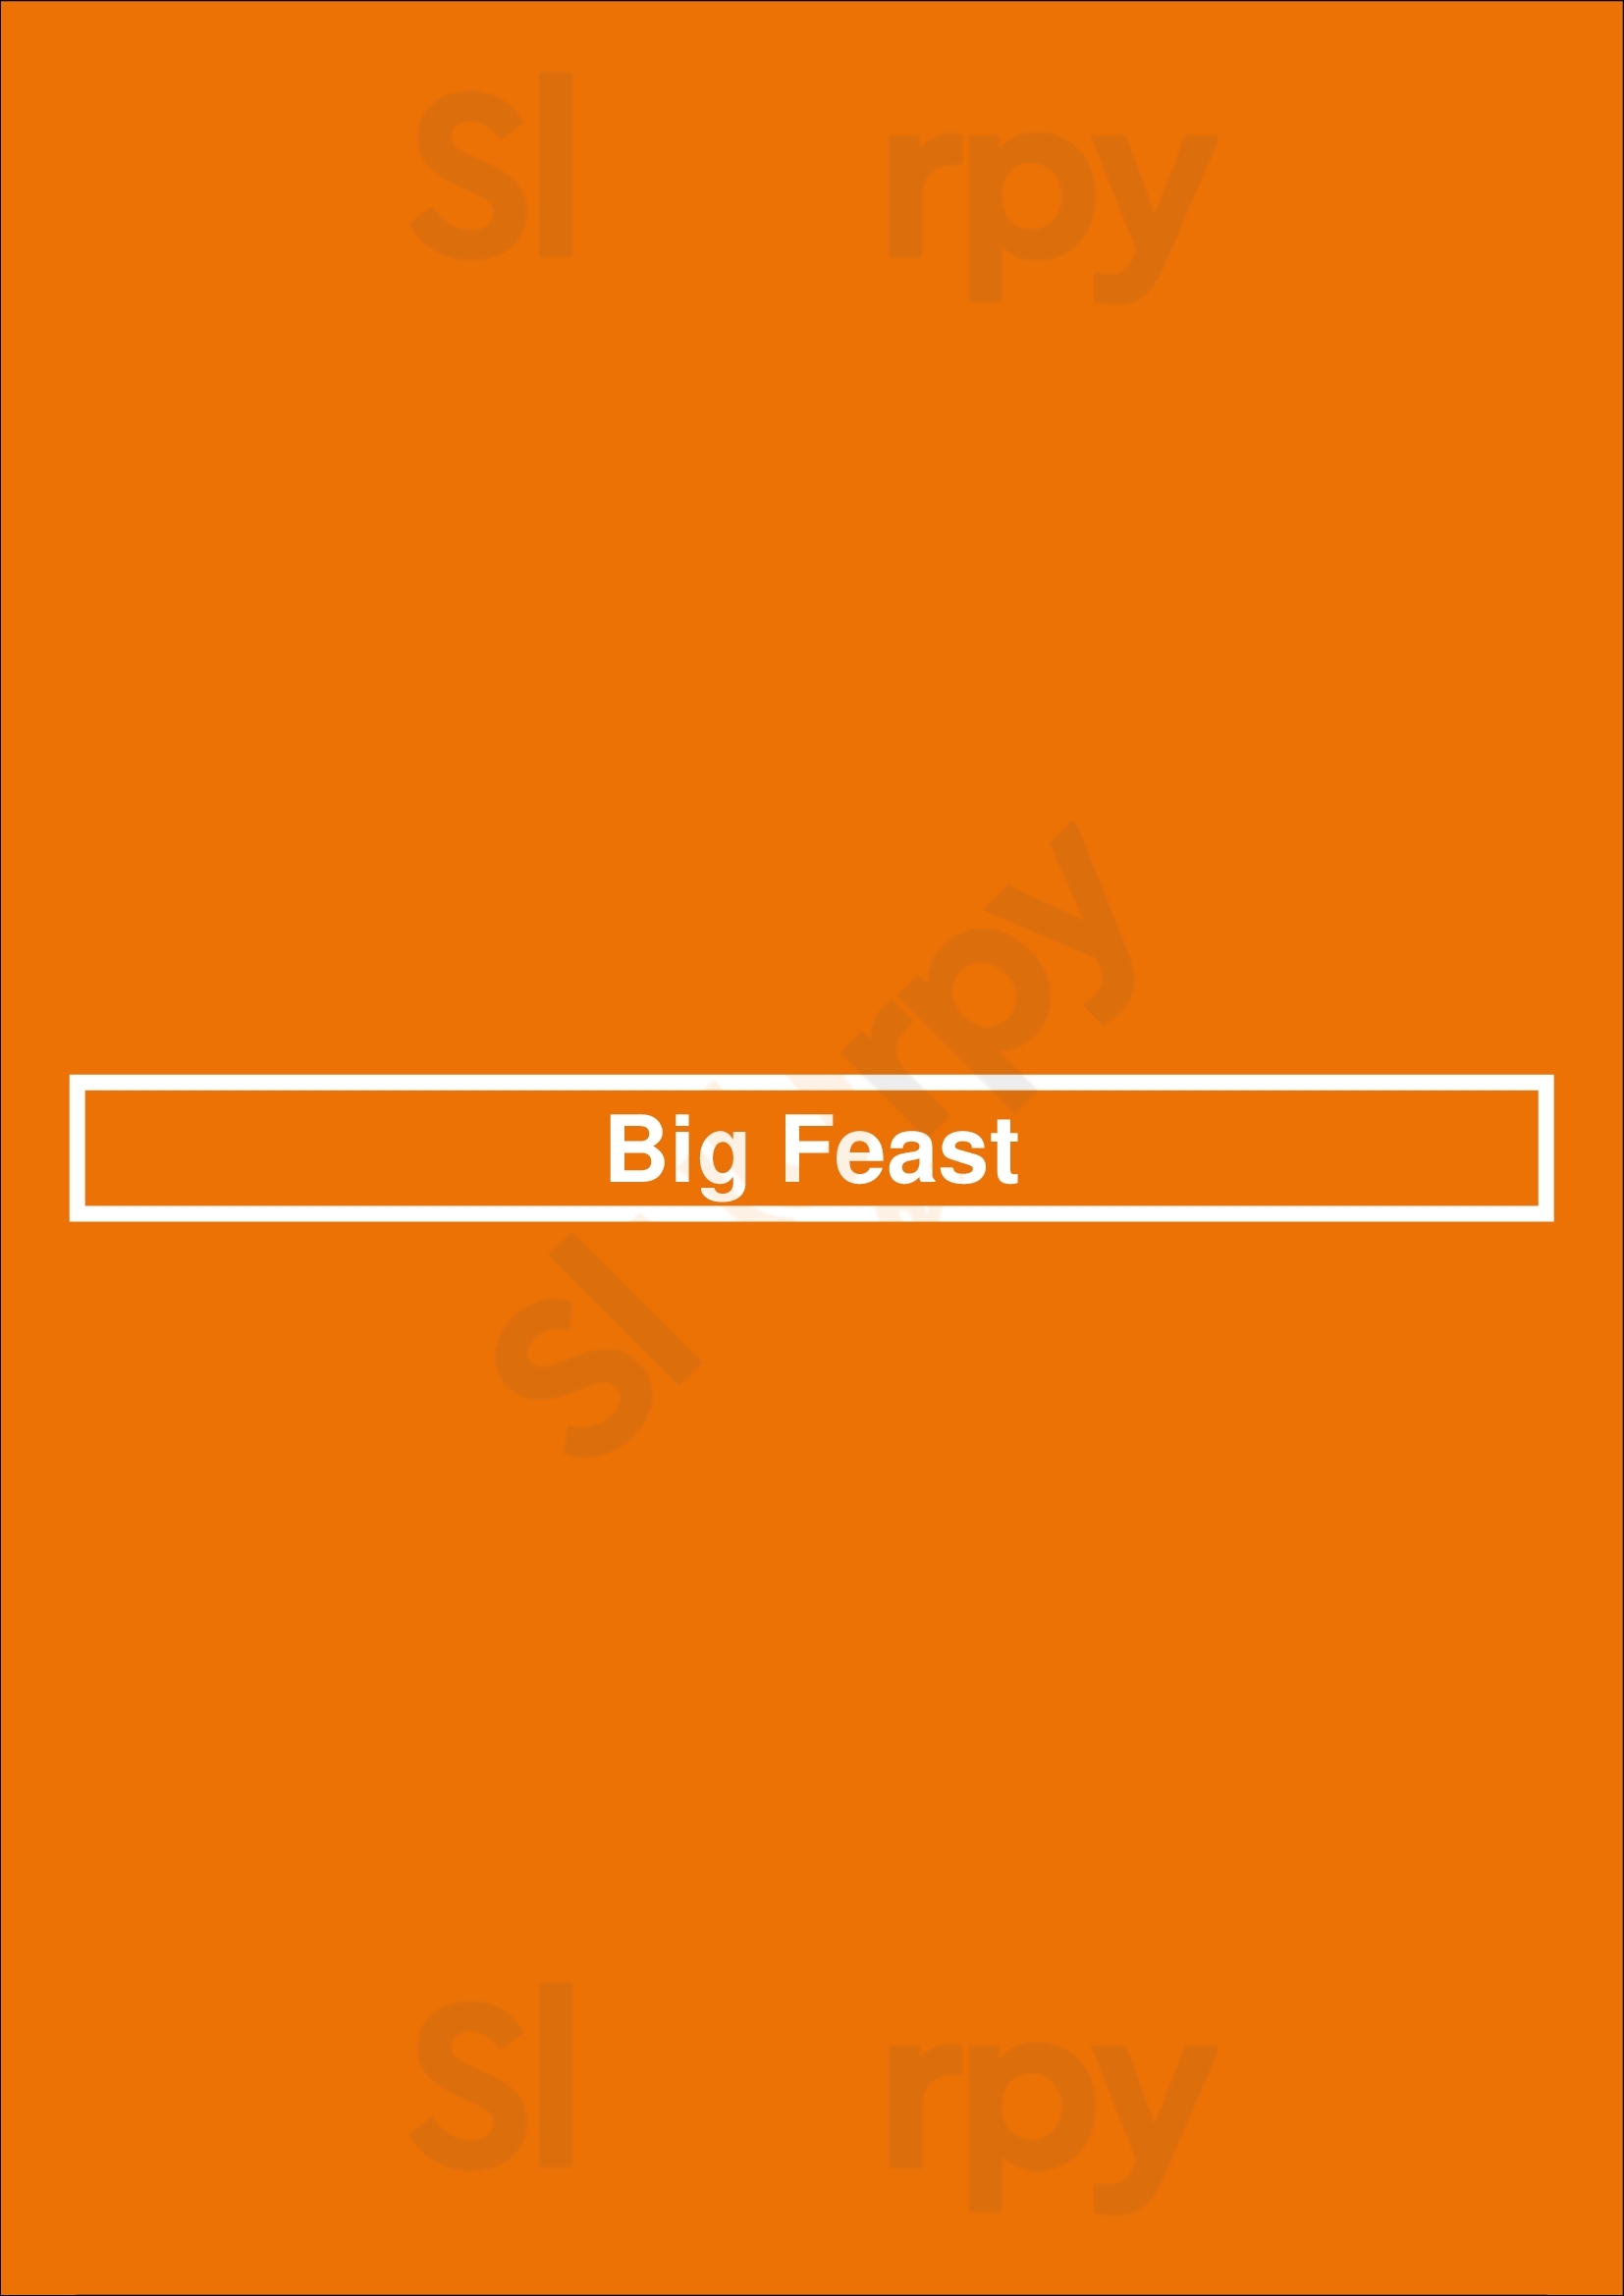 Big Feast Maple Ridge Menu - 1